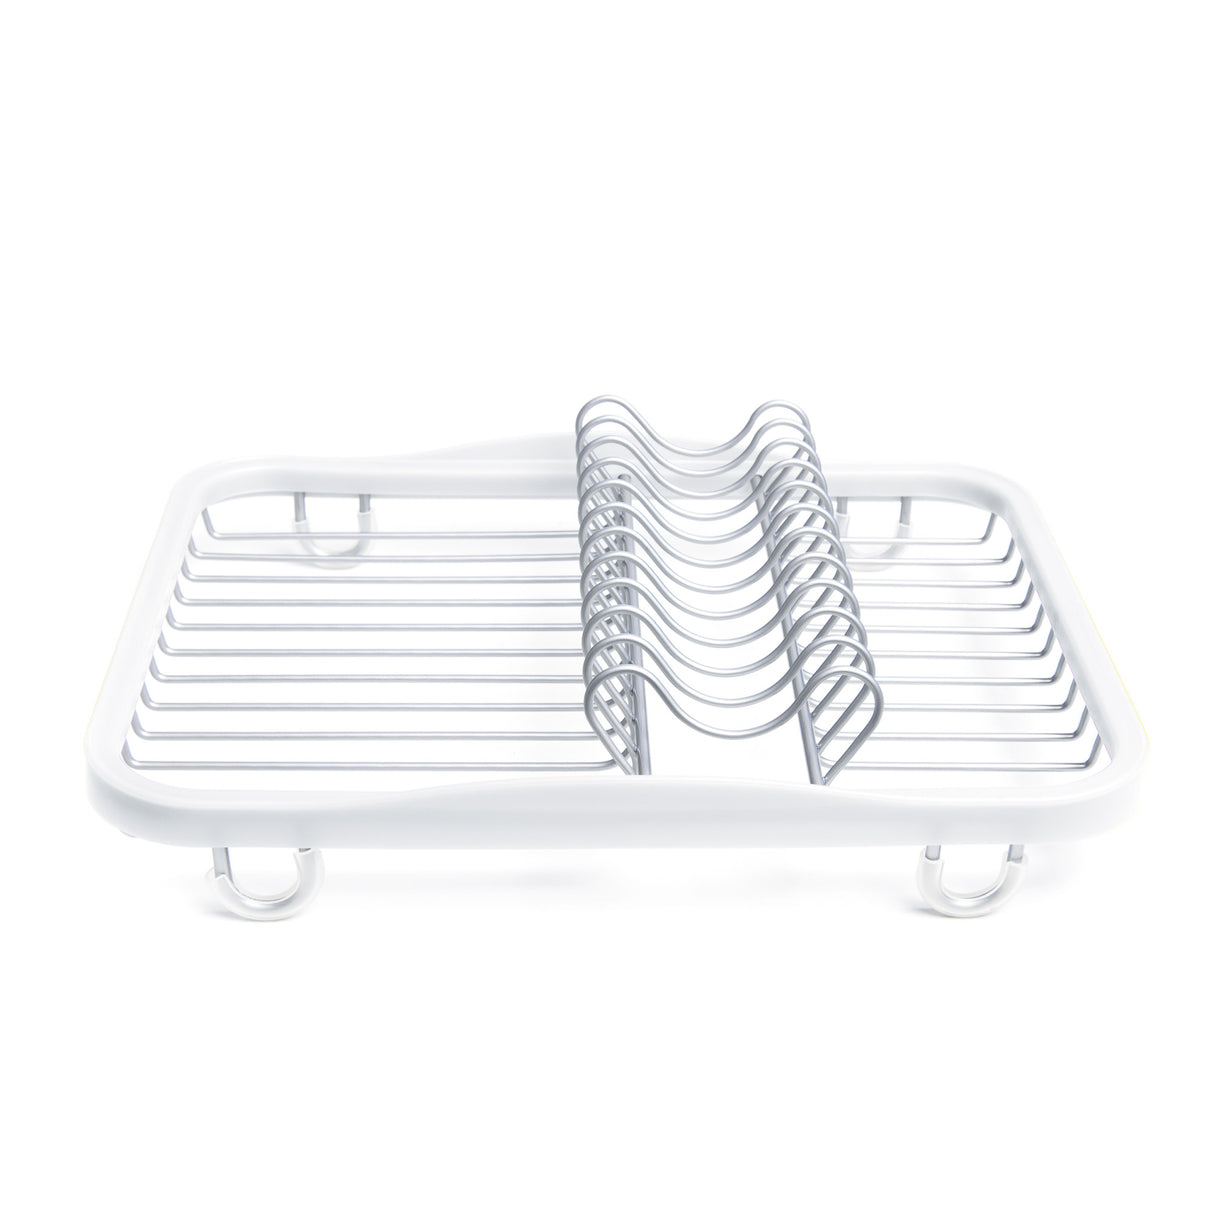 Dish Racks | color: White-Nickel